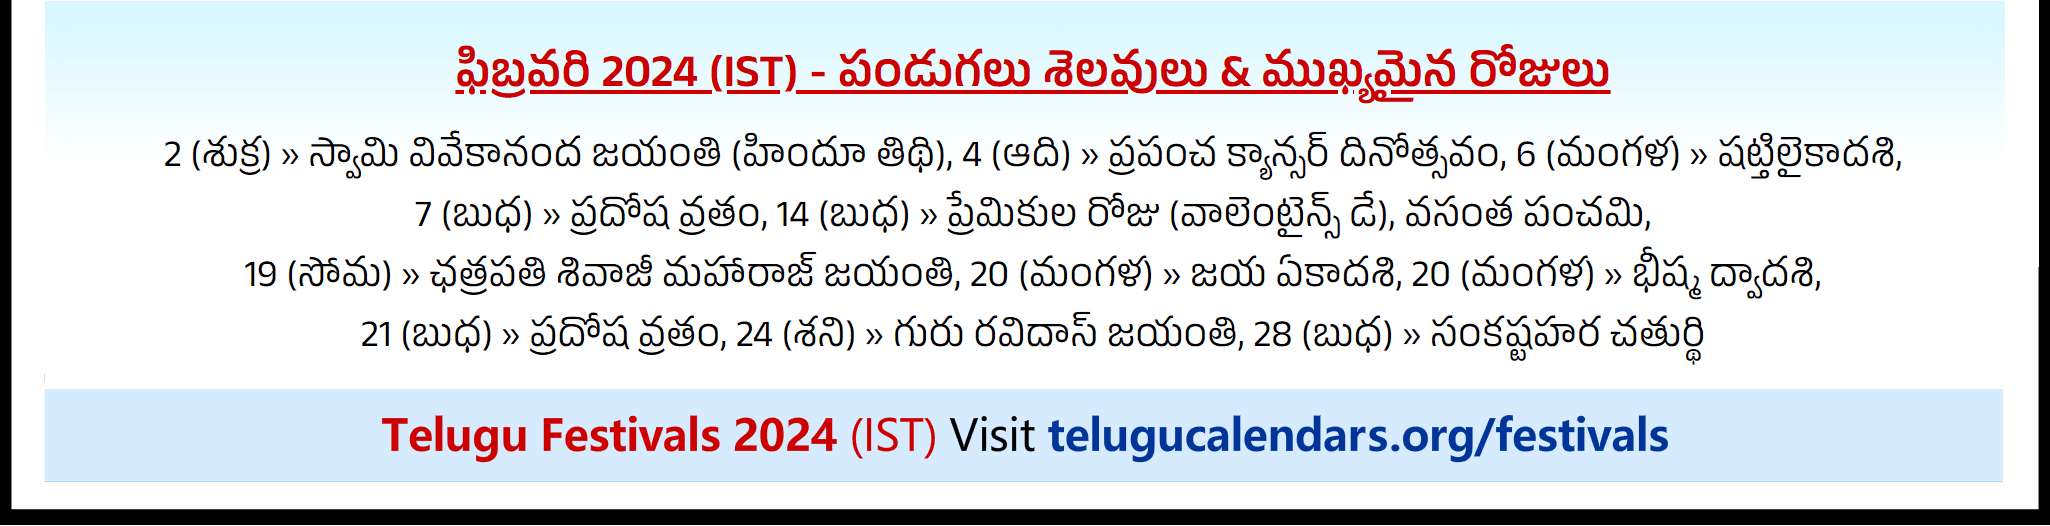 Telugu Festivals 2024 February Chicago